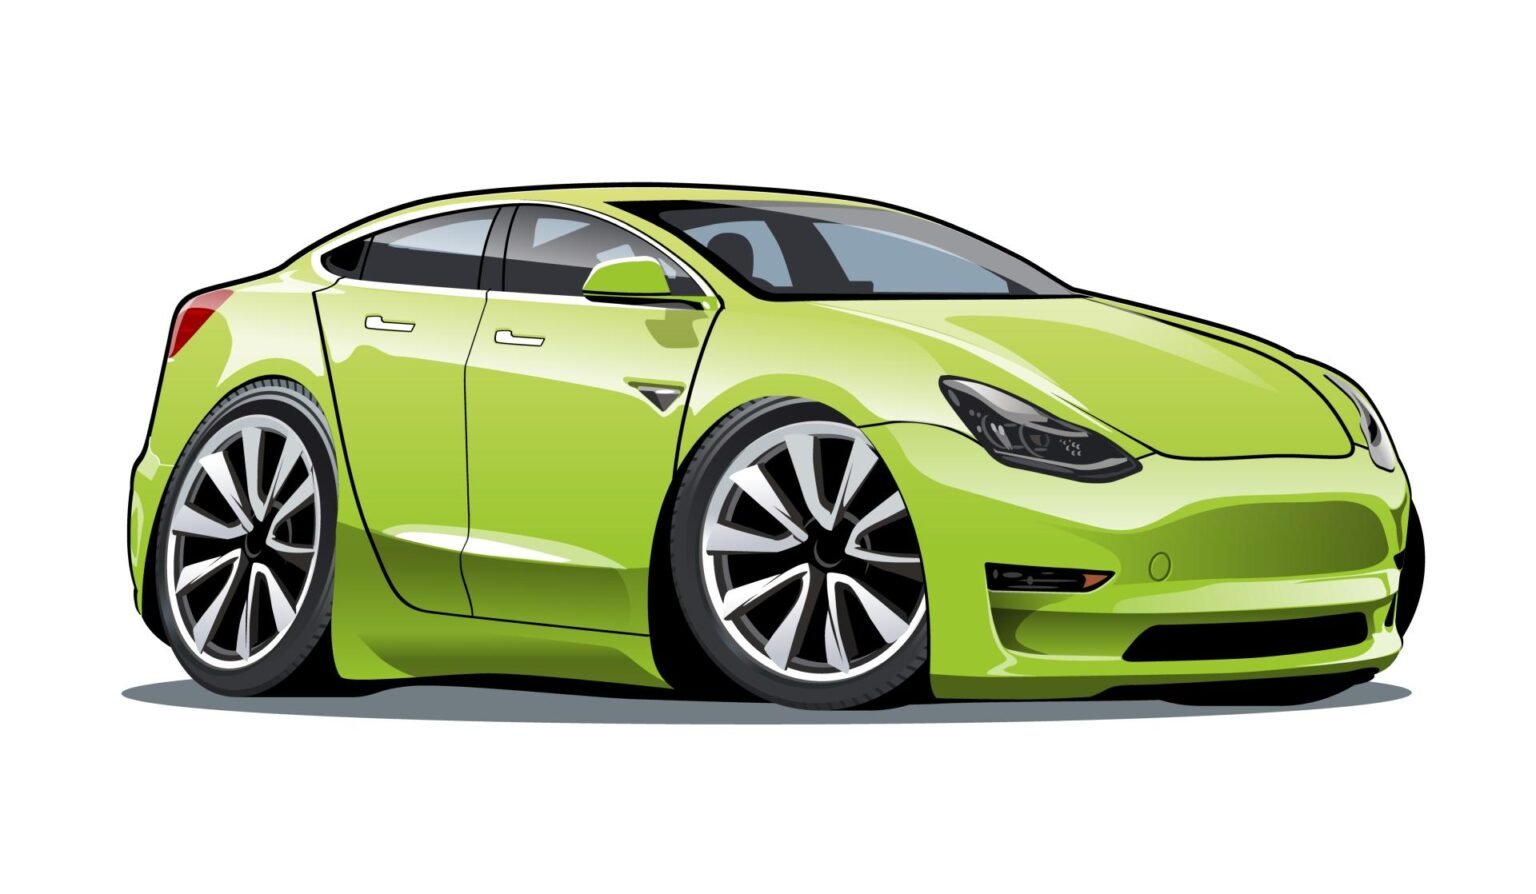 Tesla kündigt 25.000 USD E-Auto an - kommt es auf Basis VW MEB-Entry-Plattform?